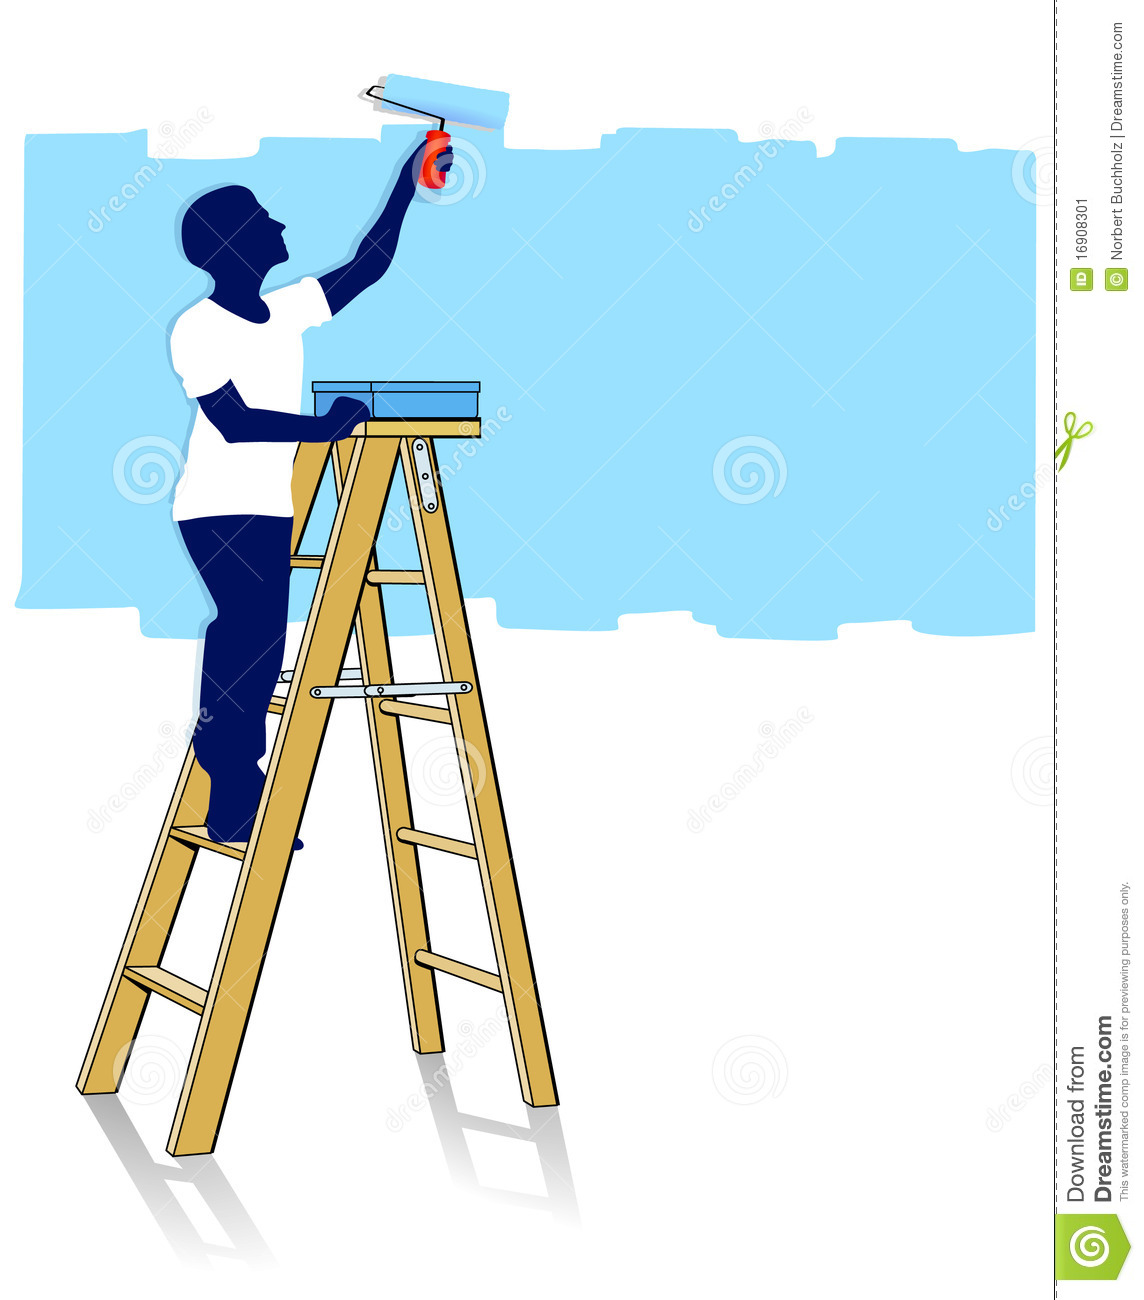 Painter On Ladder Stock Image   Image  16908301